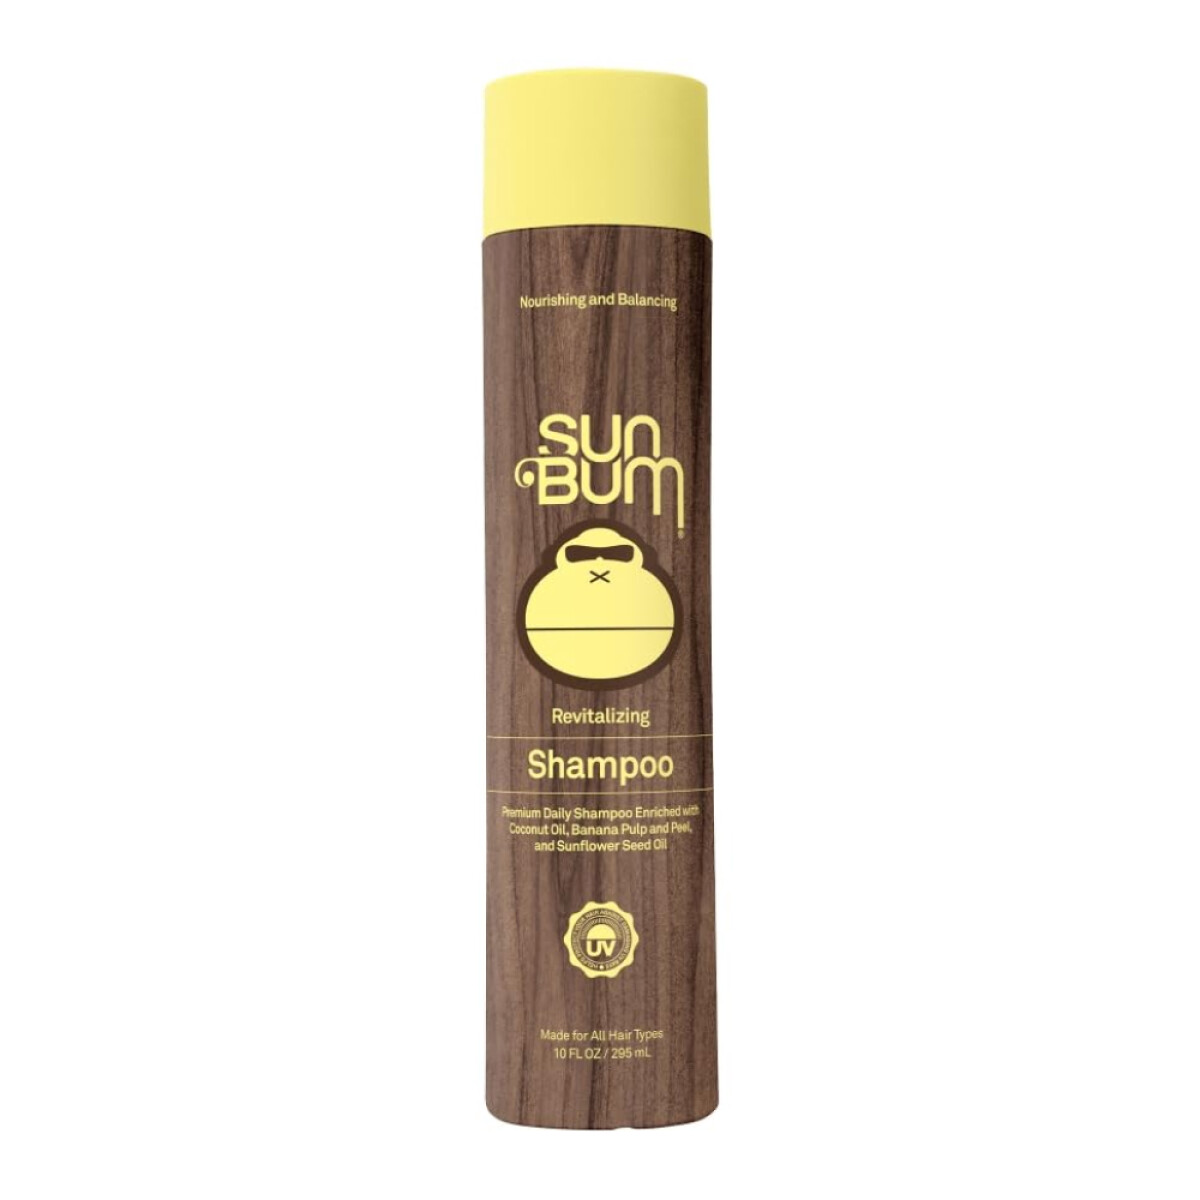 Shampoo Sun Bum Revitalizing 300 Ml / 10 Fl Oz 